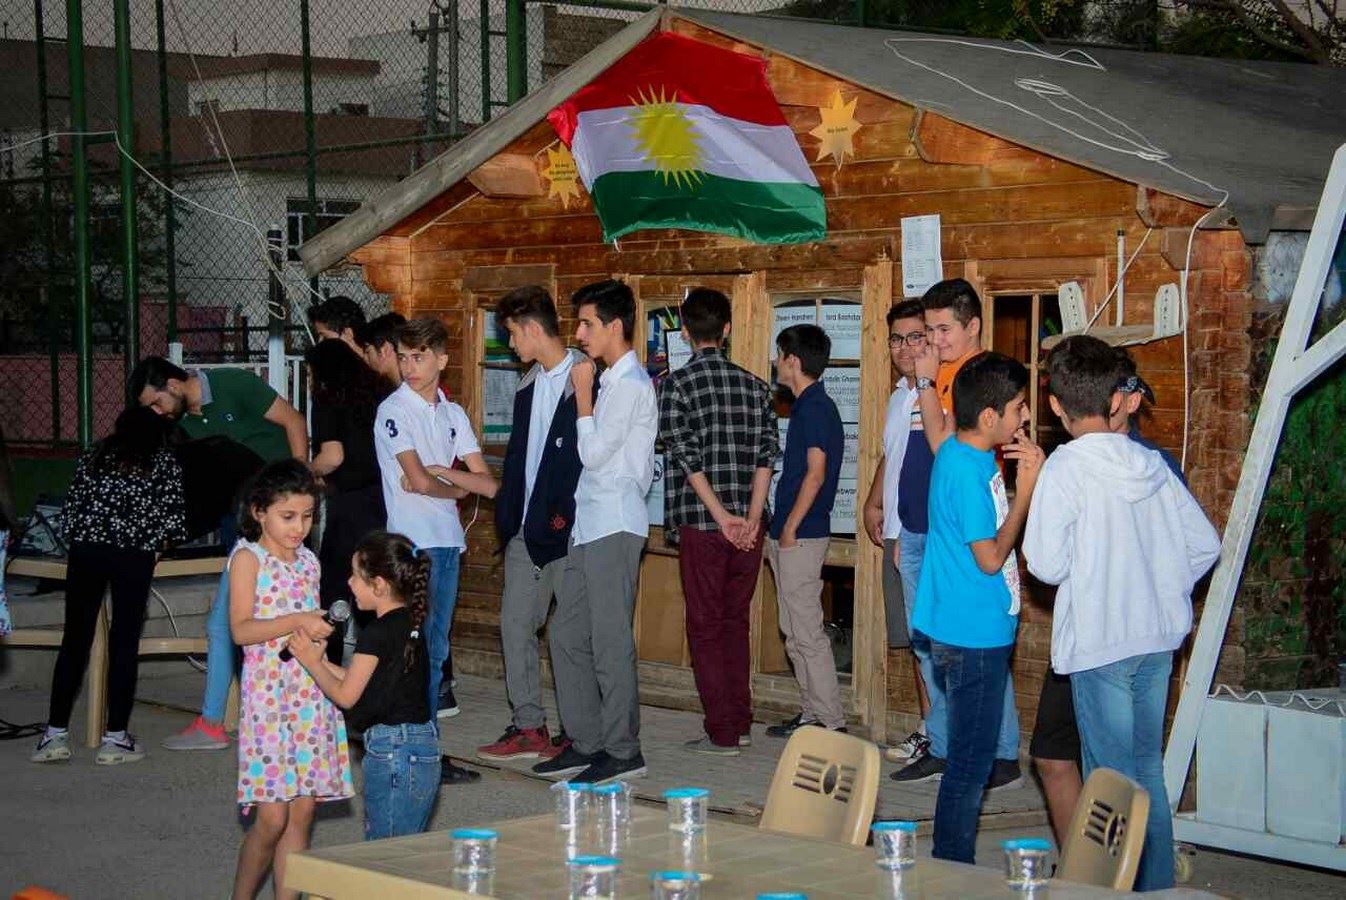 Students at Sarwaran International School Participate in Barbeque Event